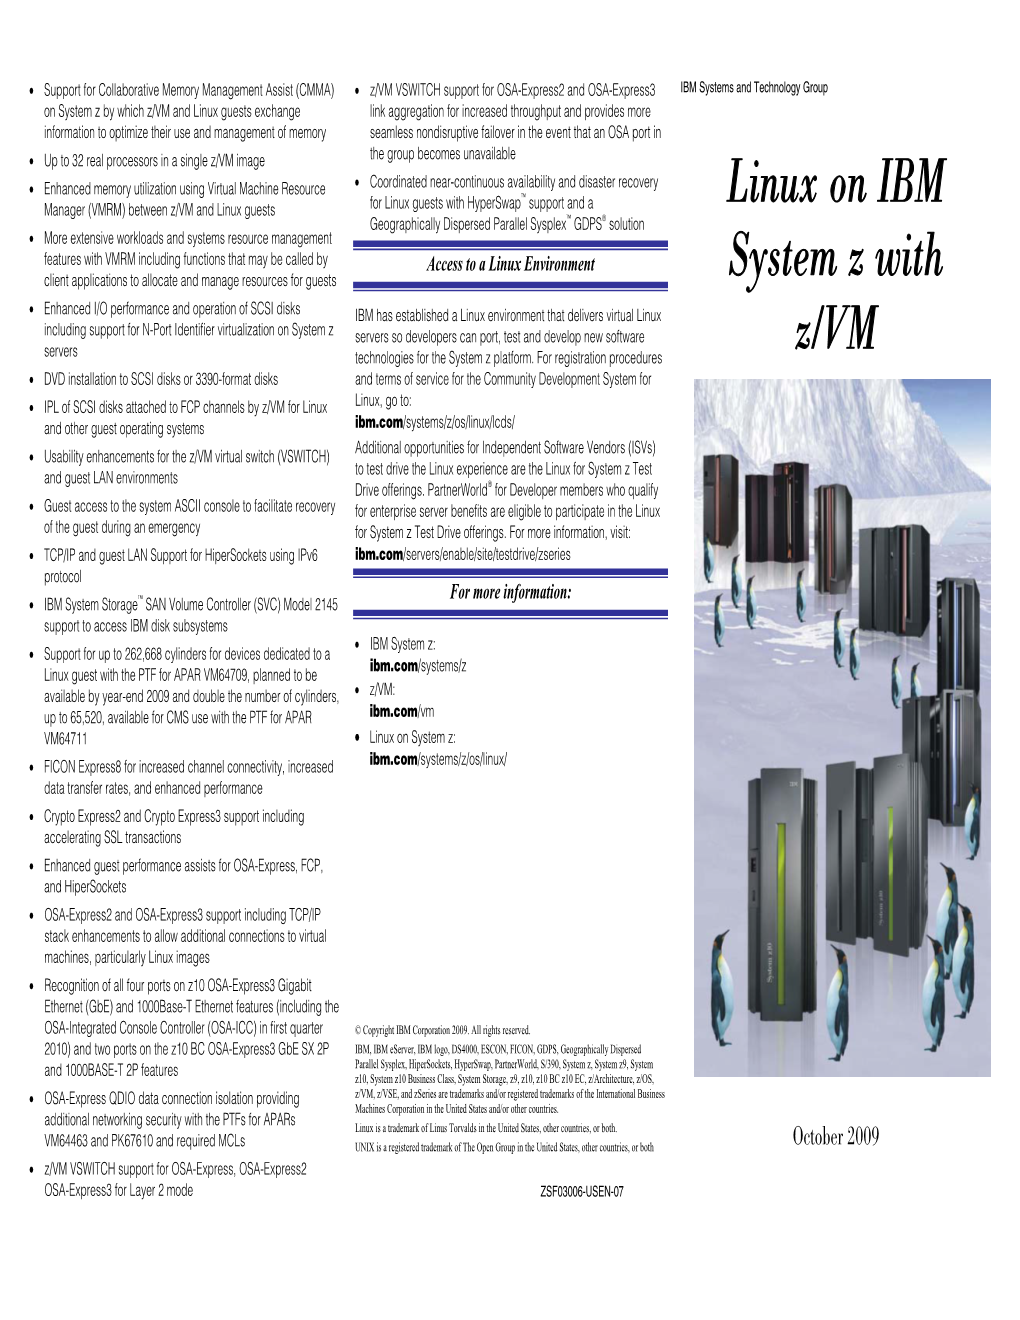 Linux on IBM System Z with Z/VM